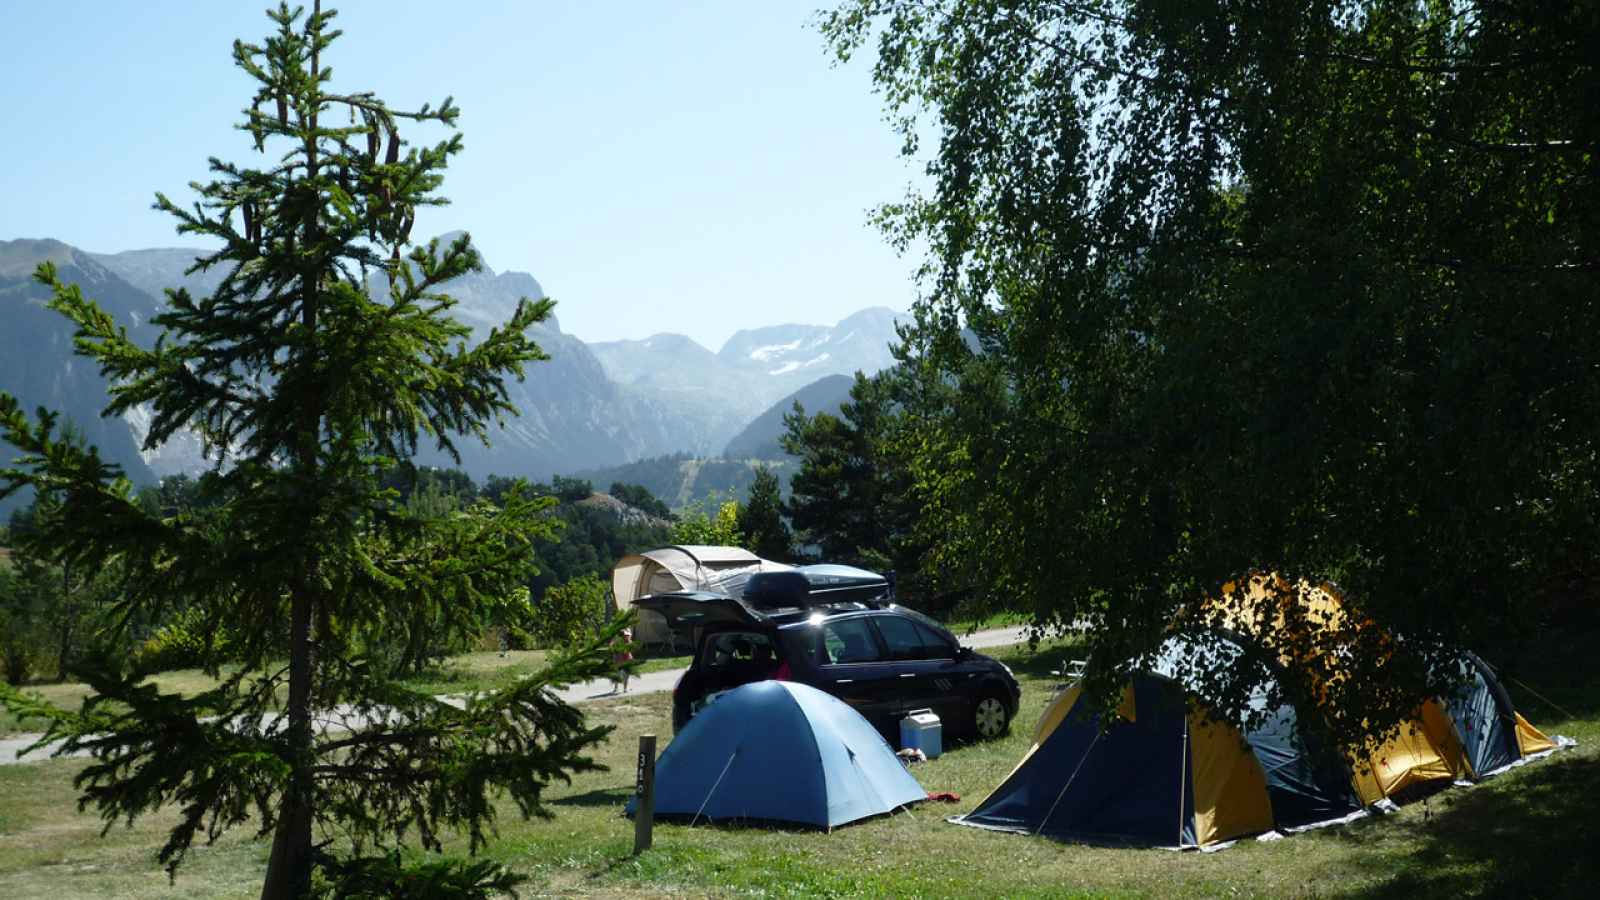 Municipal winter camping open all year round